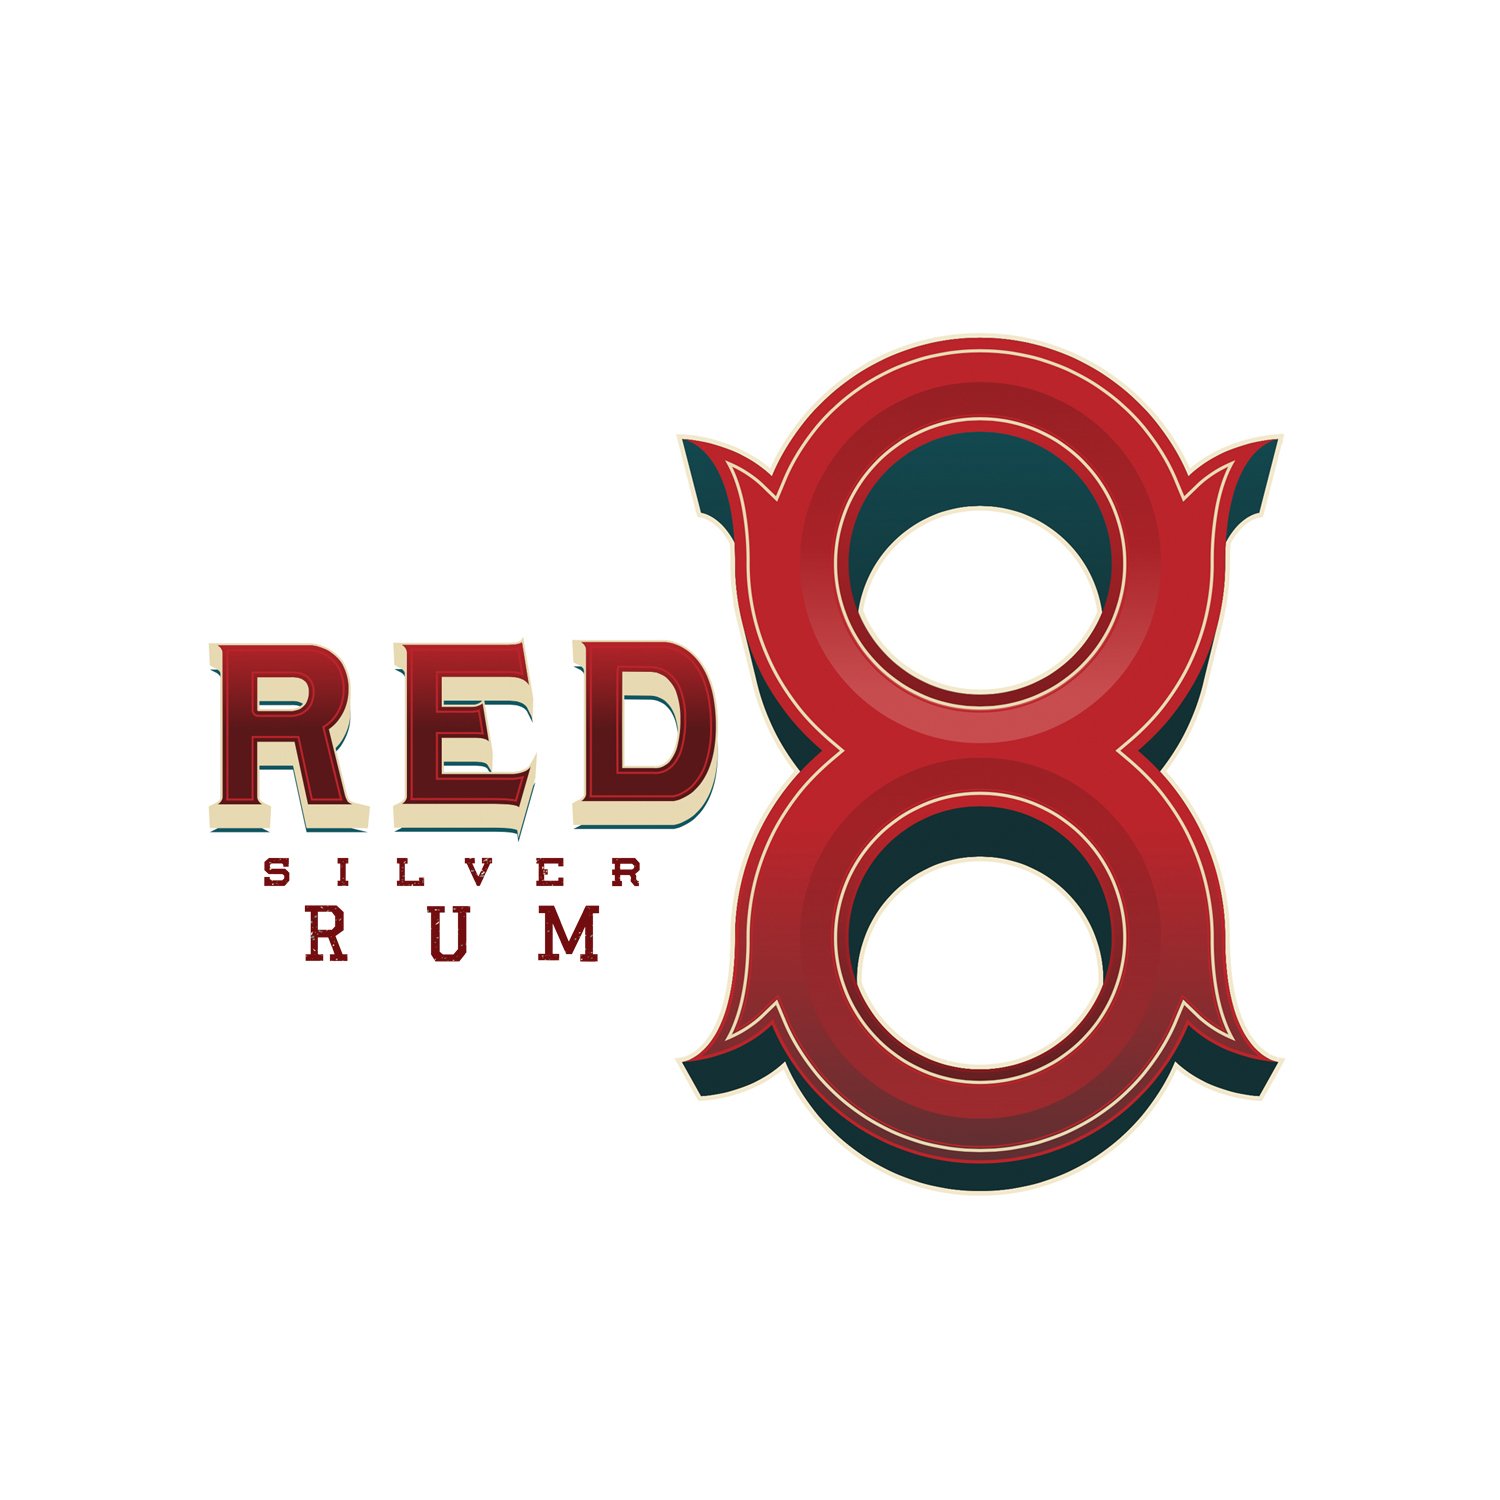 Red 8 Rum logo